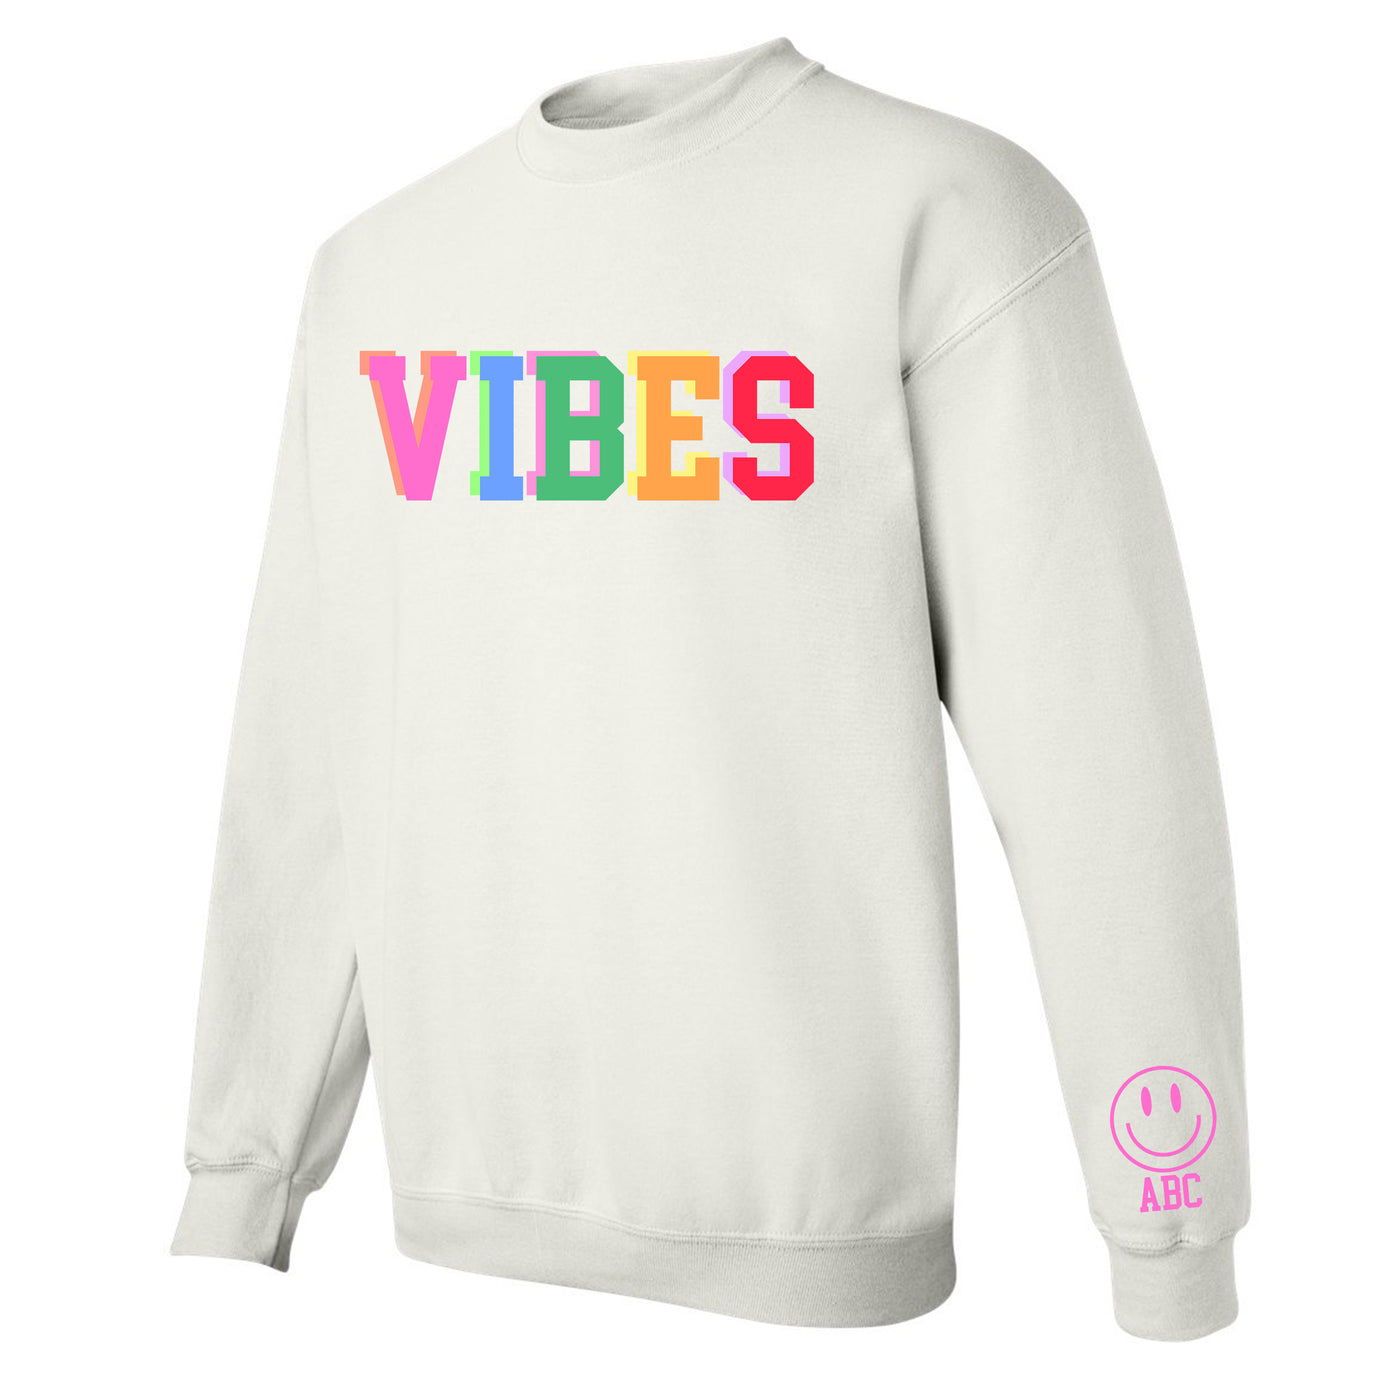 Initialed Colorful Block 'Vibes' Crewneck Sweatshirt